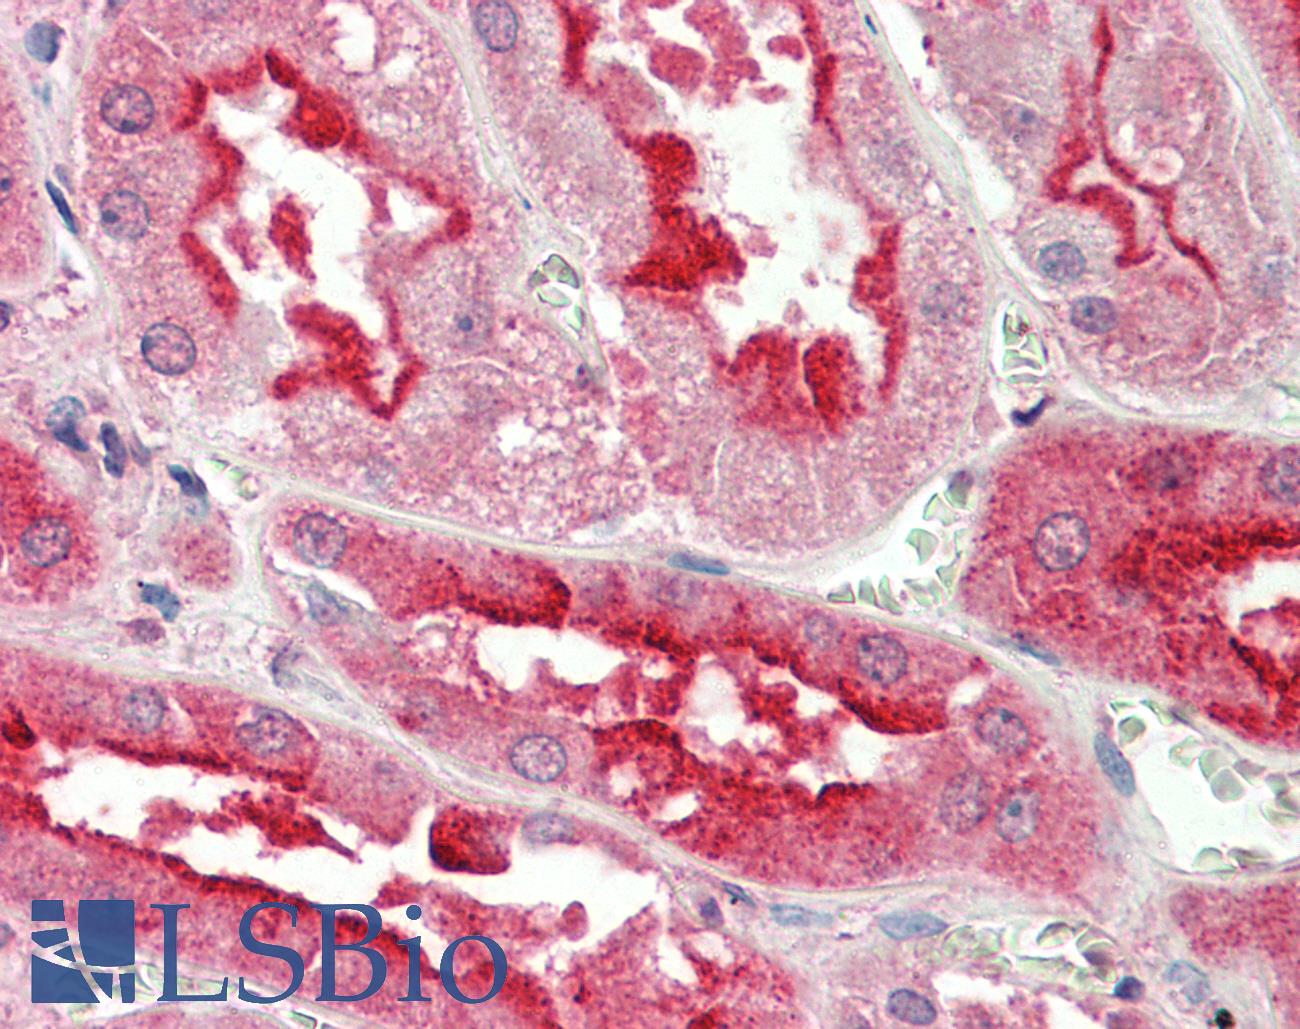 SDF4 Antibody - Human, Kidney: Formalin-Fixed Paraffin-Embedded (FFPE)